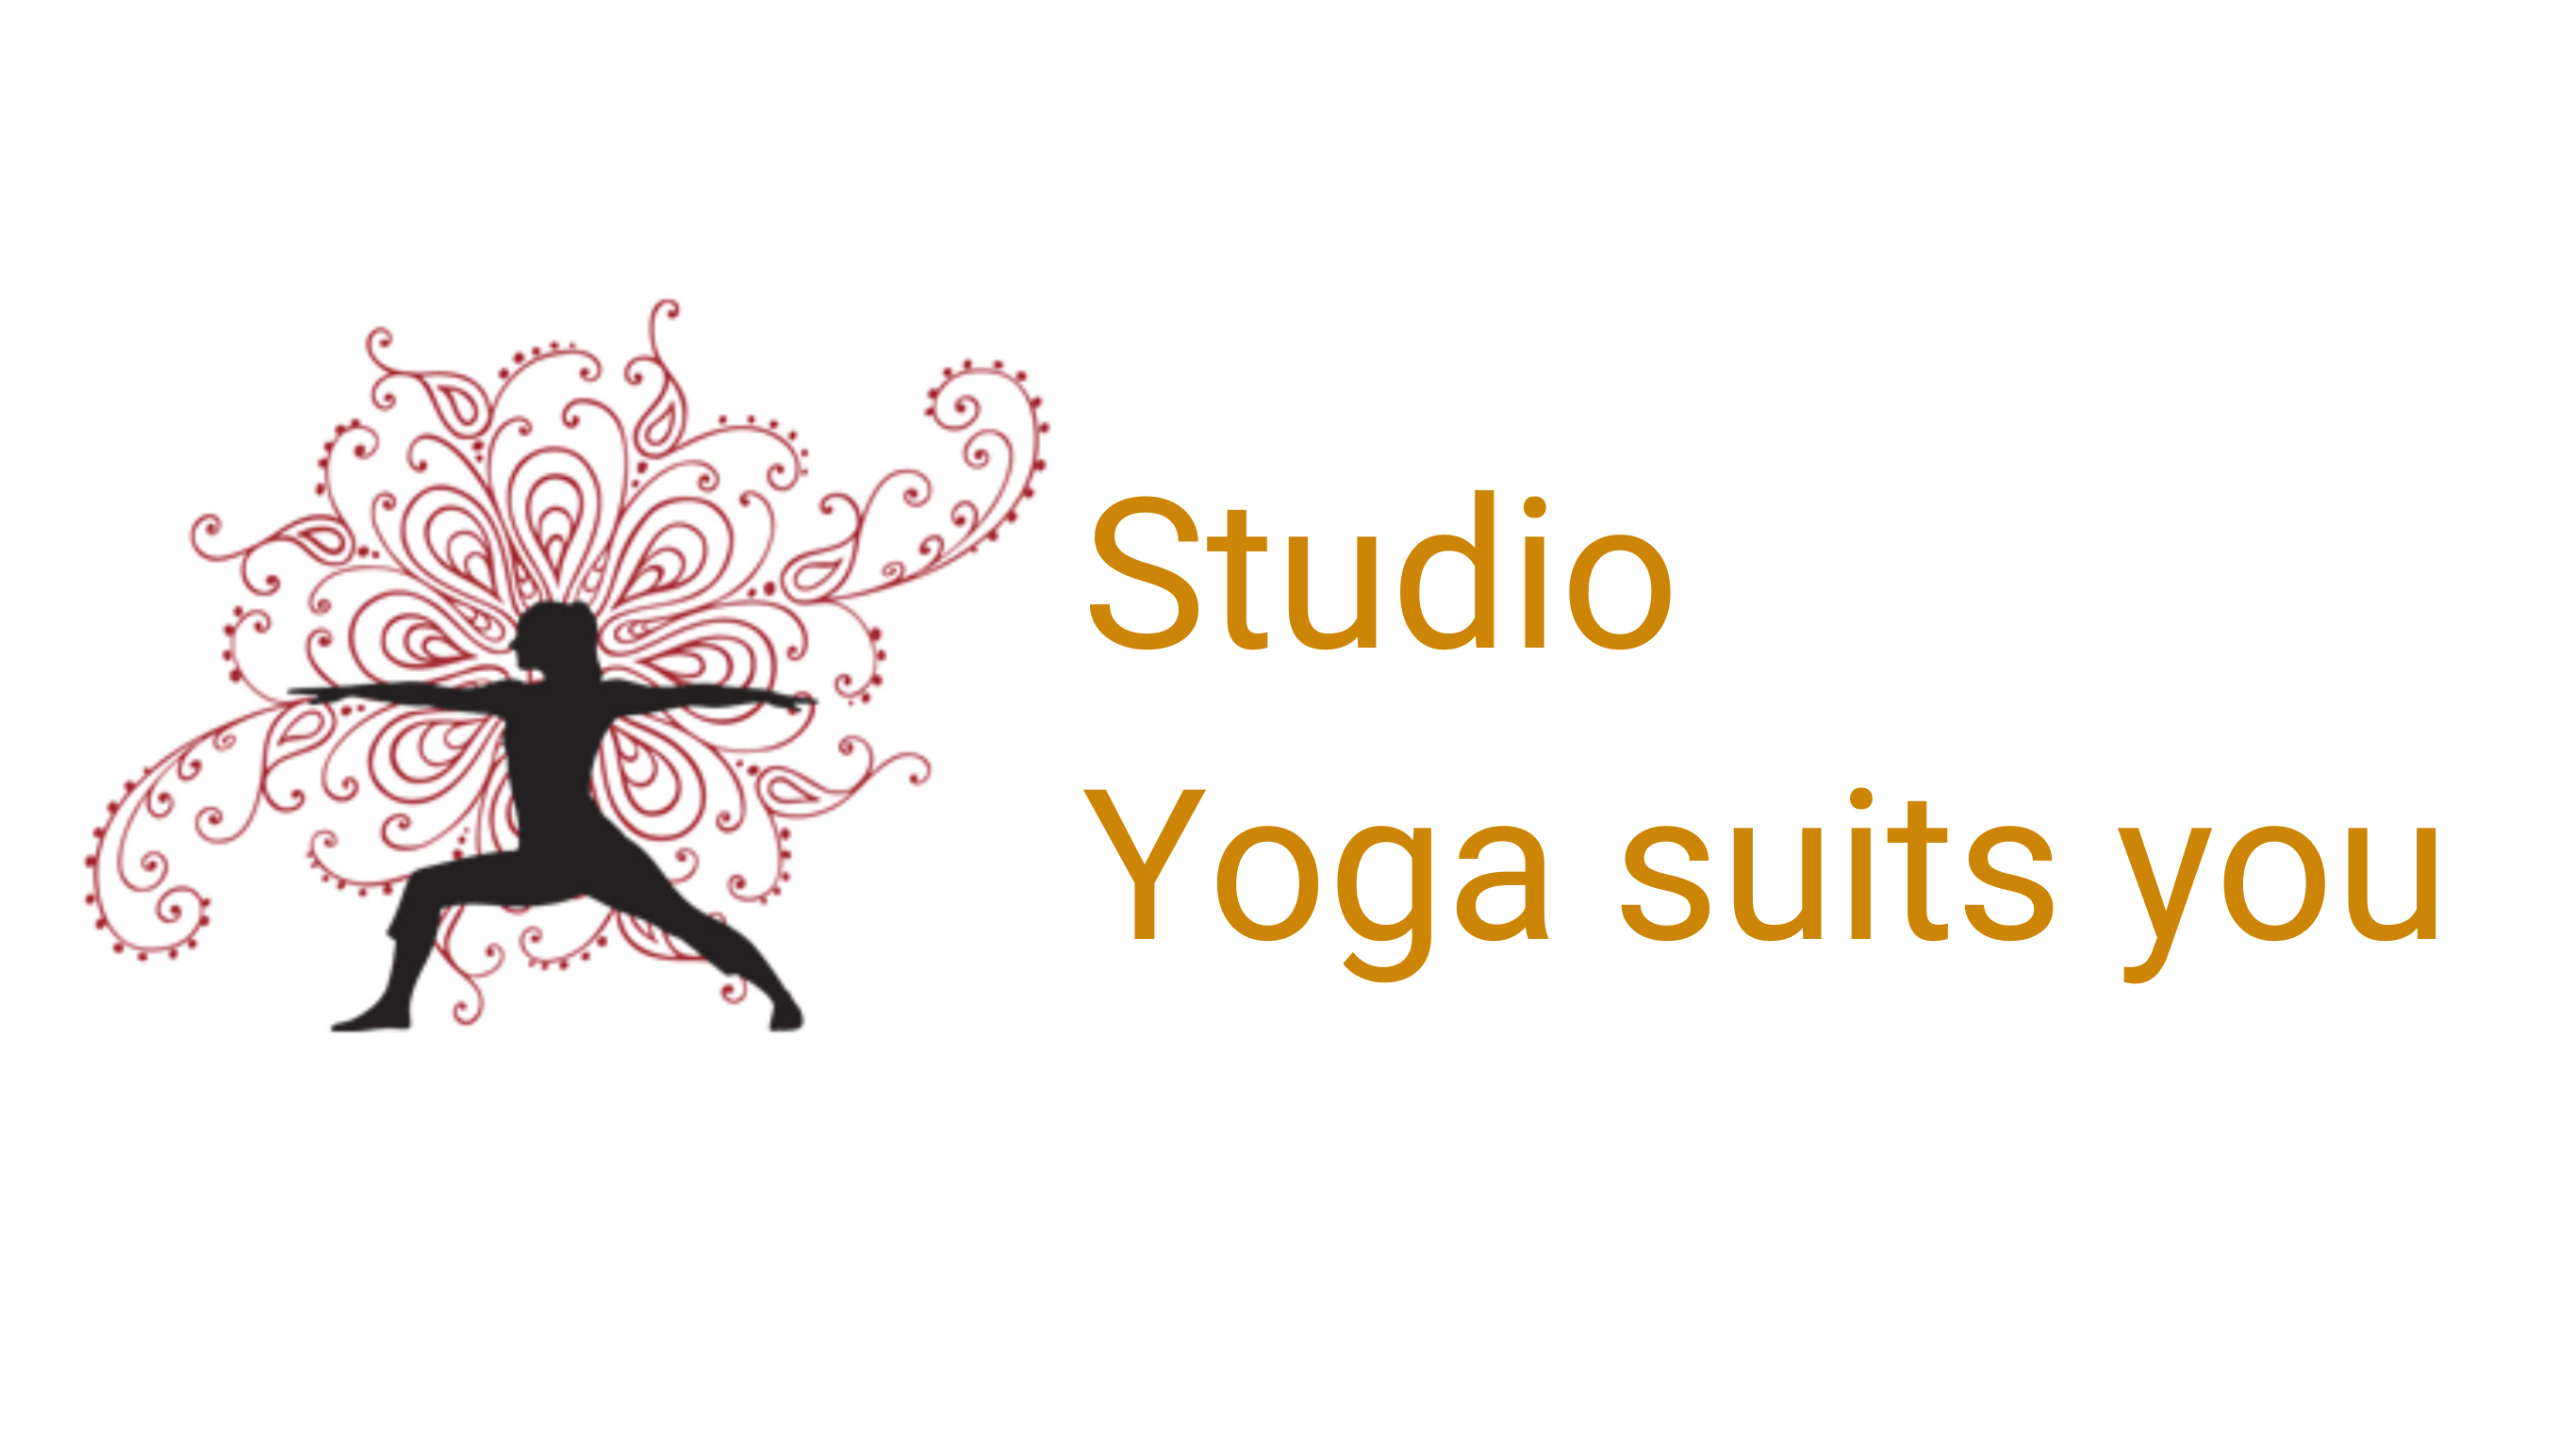 Studio Yoga suits you